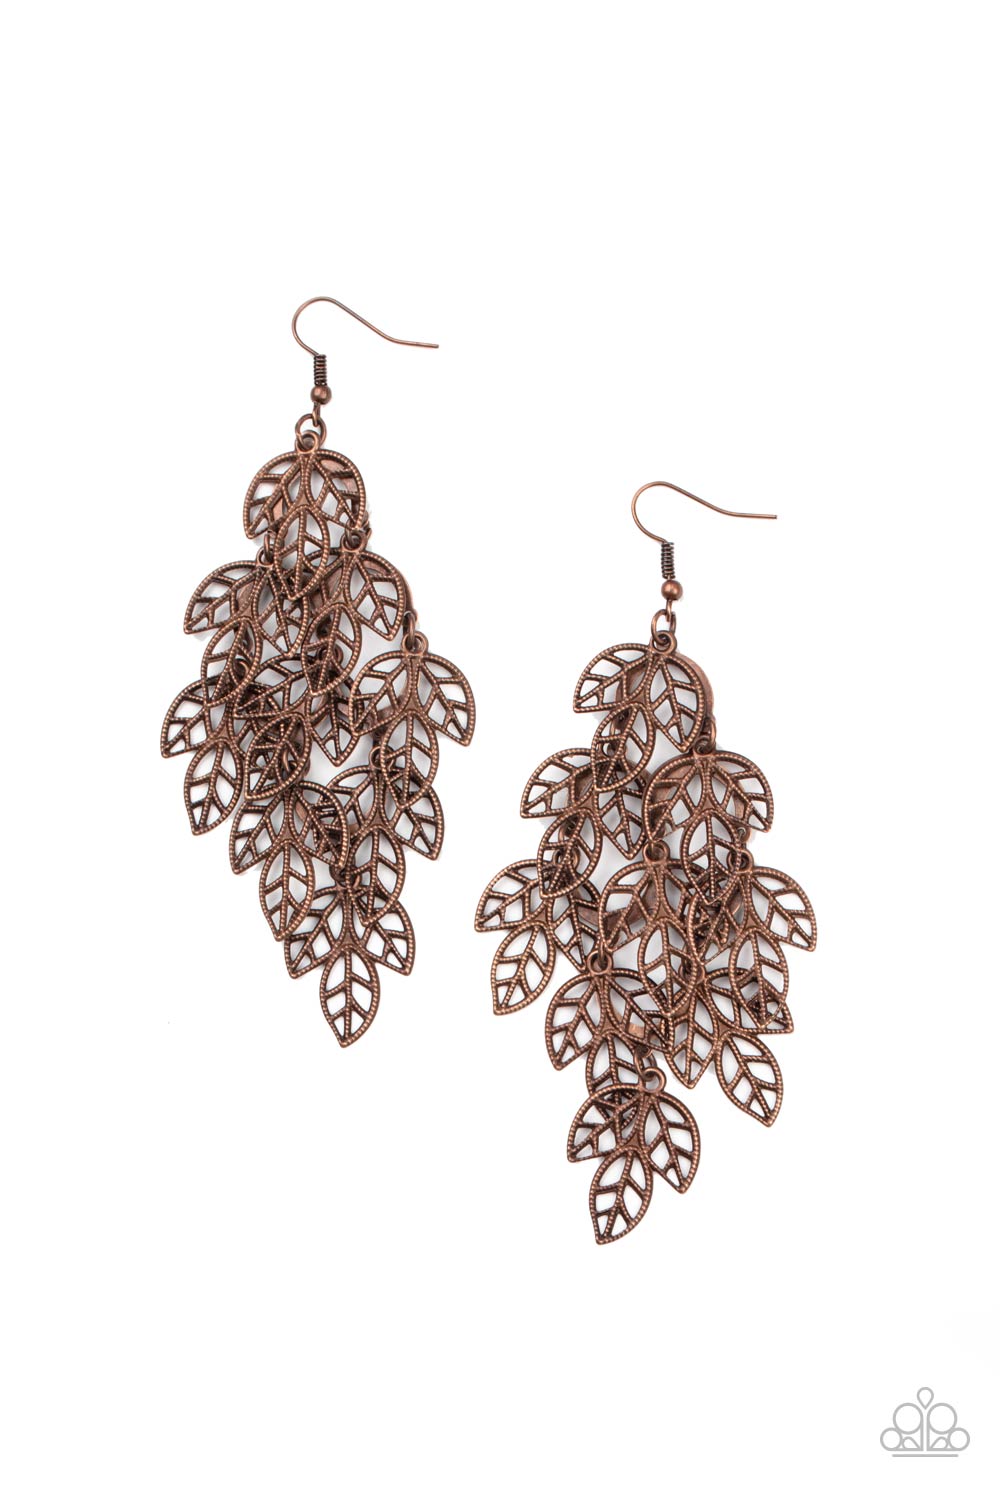 Dangling copper leaf clusters, dancing from a  fishhook earring.